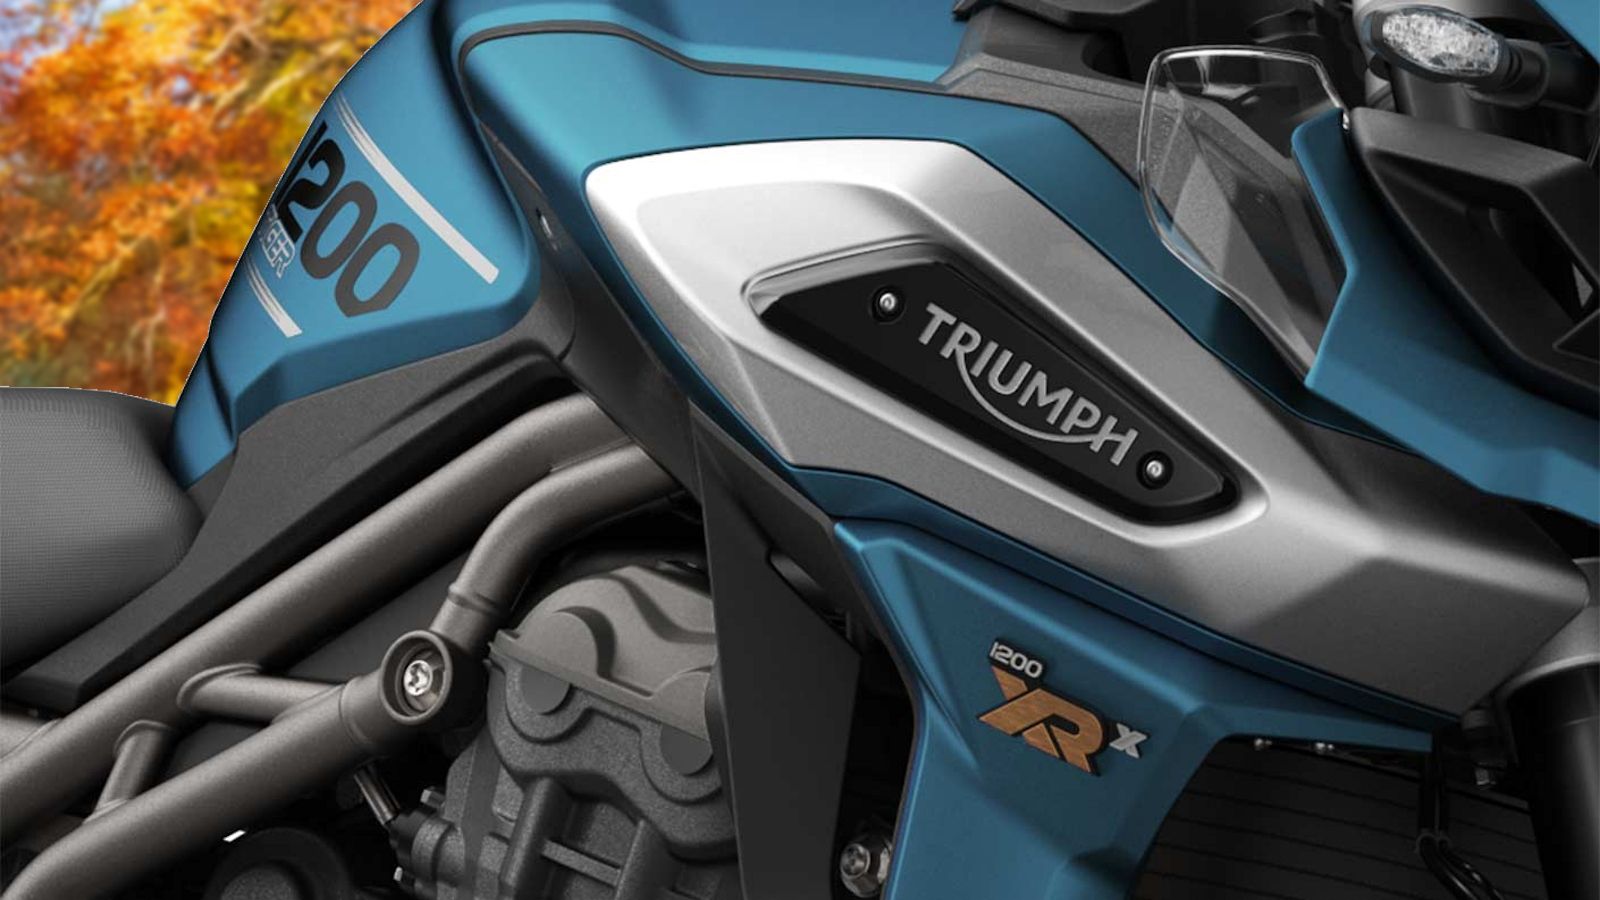 2018 - 2019 Triumph Tiger 1200 XRx